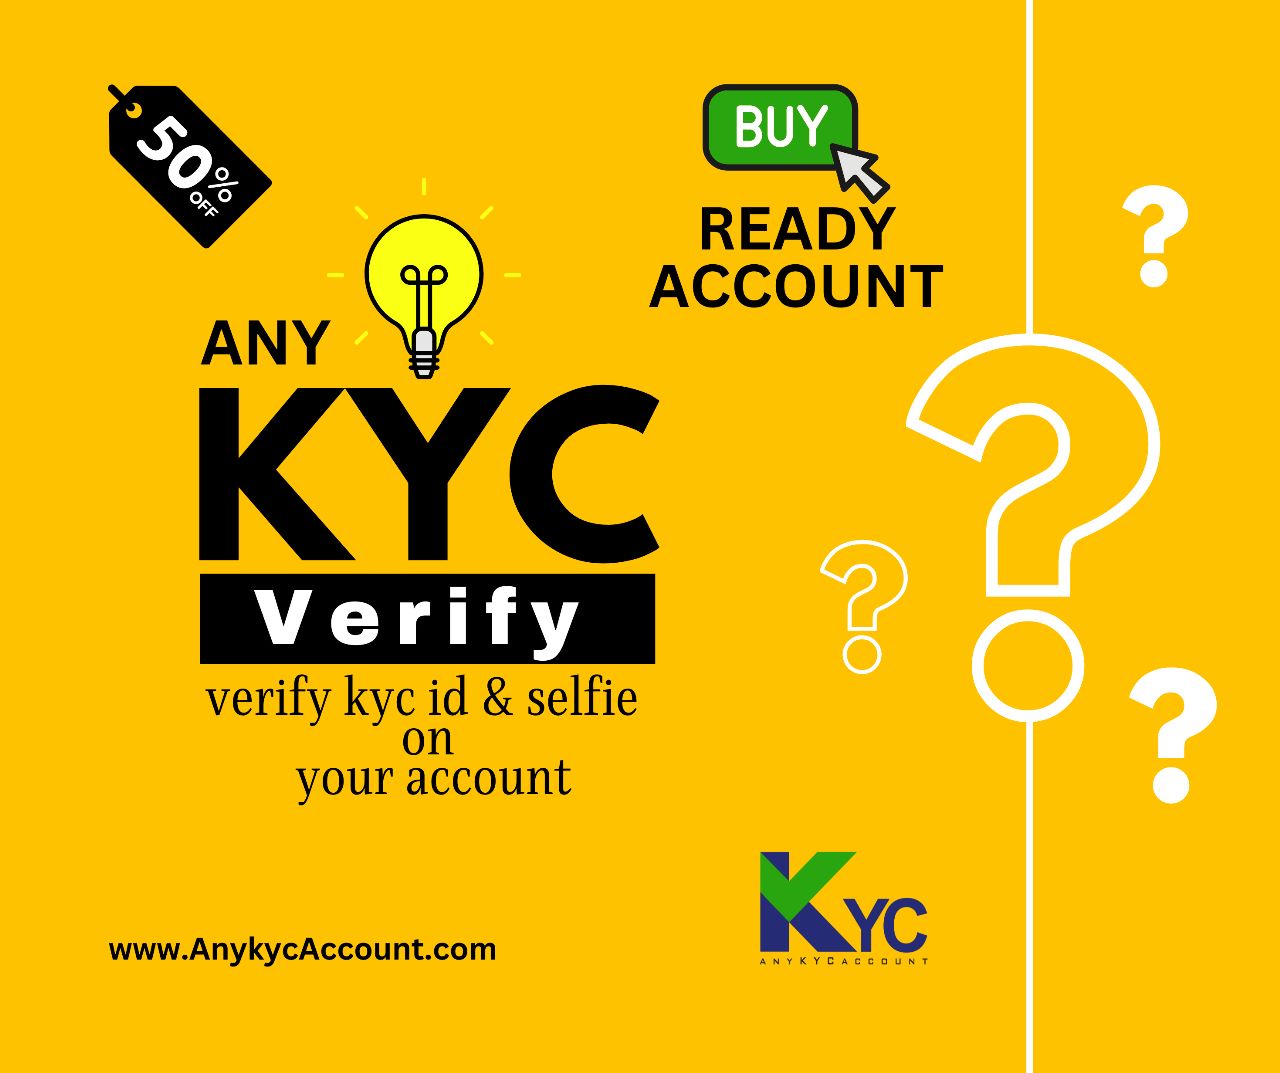 Buy verified KYC account